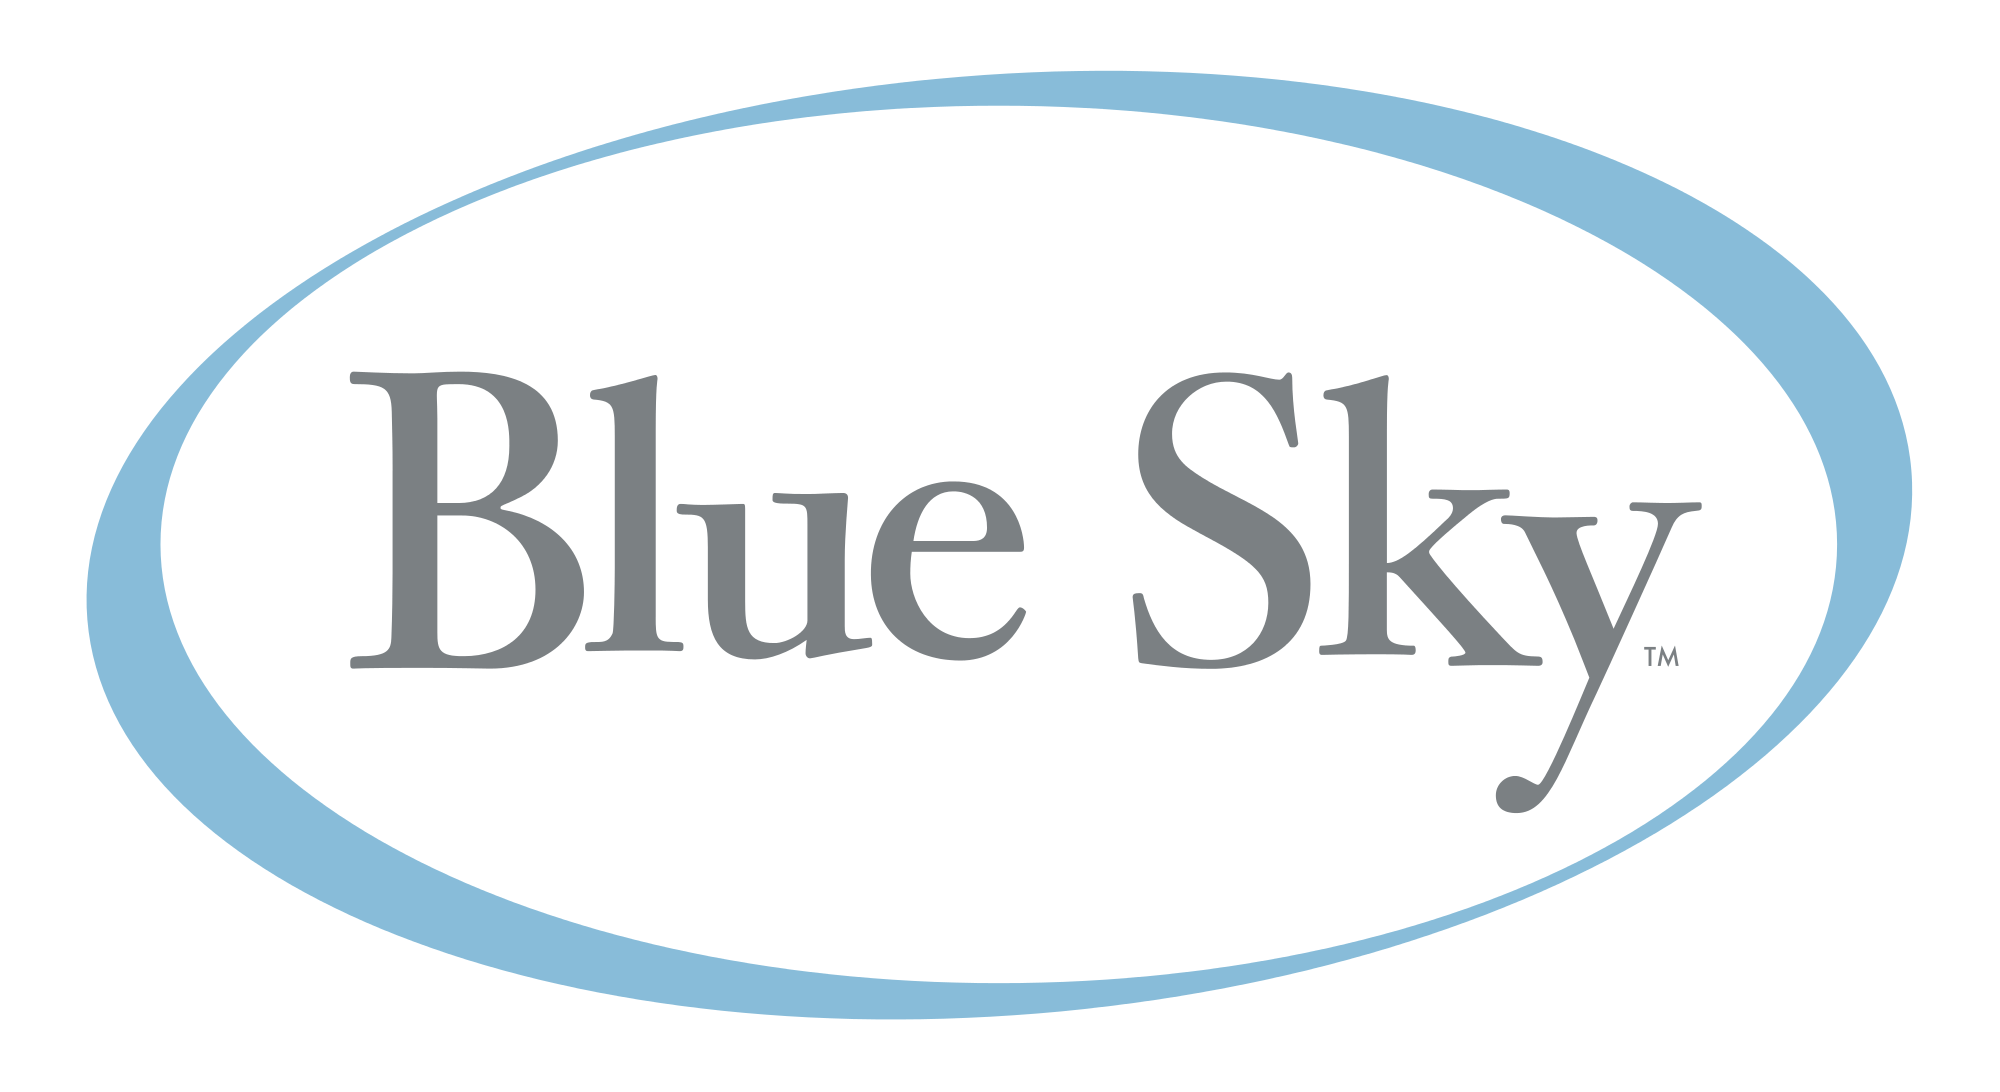 Blue Sky Studios Logo - File:Blue Sky Studios logo.svg - Wikimedia Commons